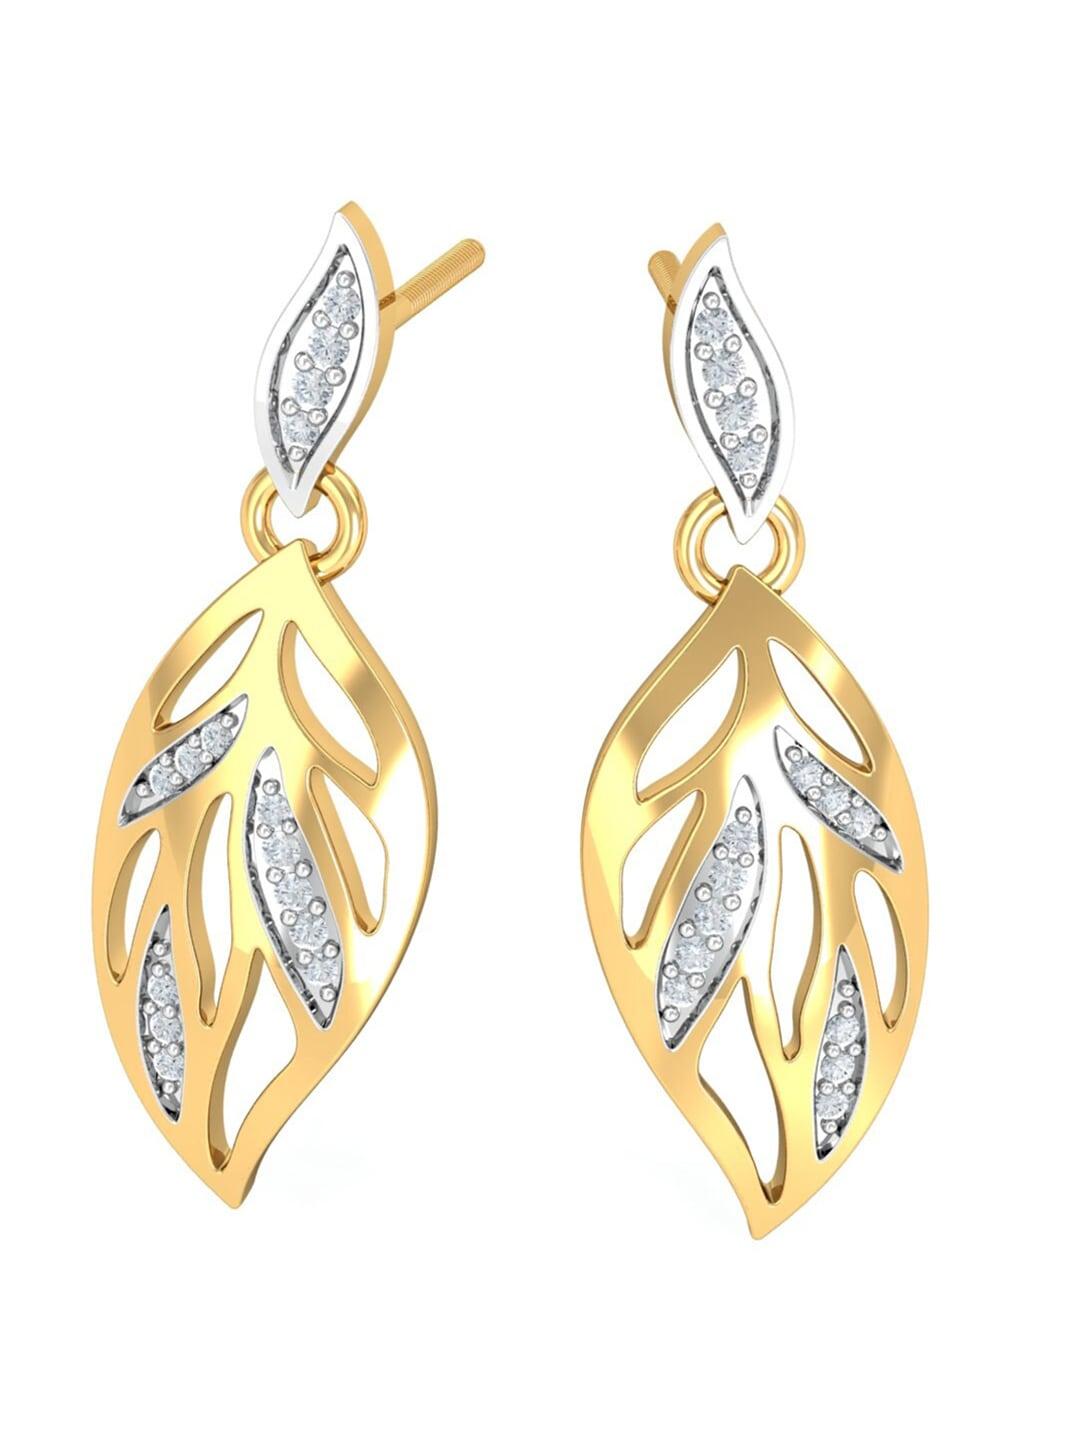 KUBERBOX 18KT Gold Diamond Earrings- 3.02gm